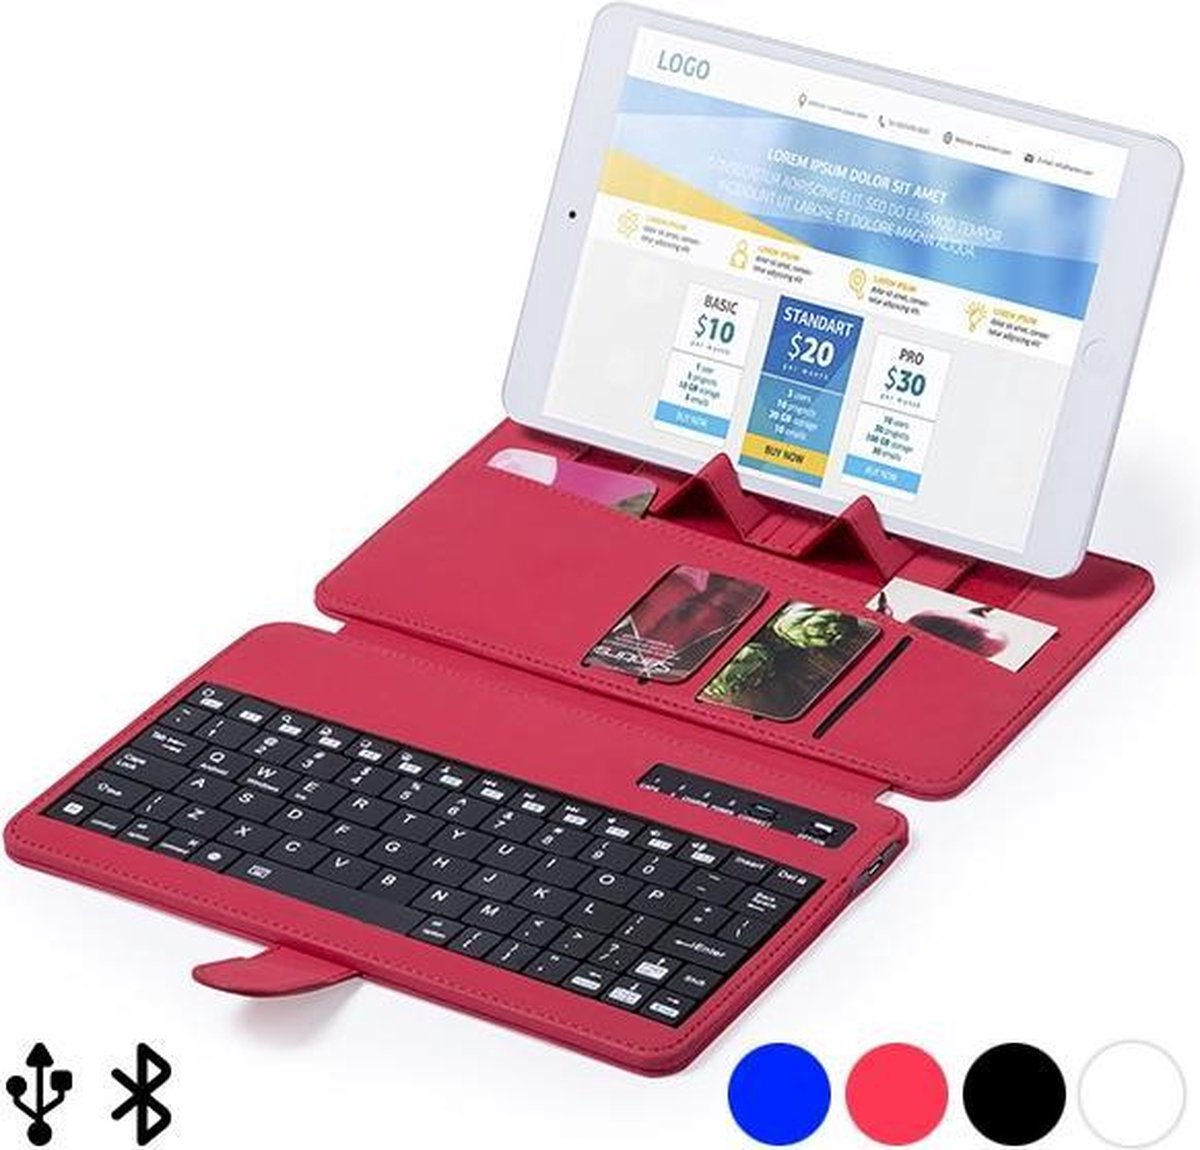 Bluetooth Toetsenbord met Ondersteuning voor Mobiel Apparaat - Blauw